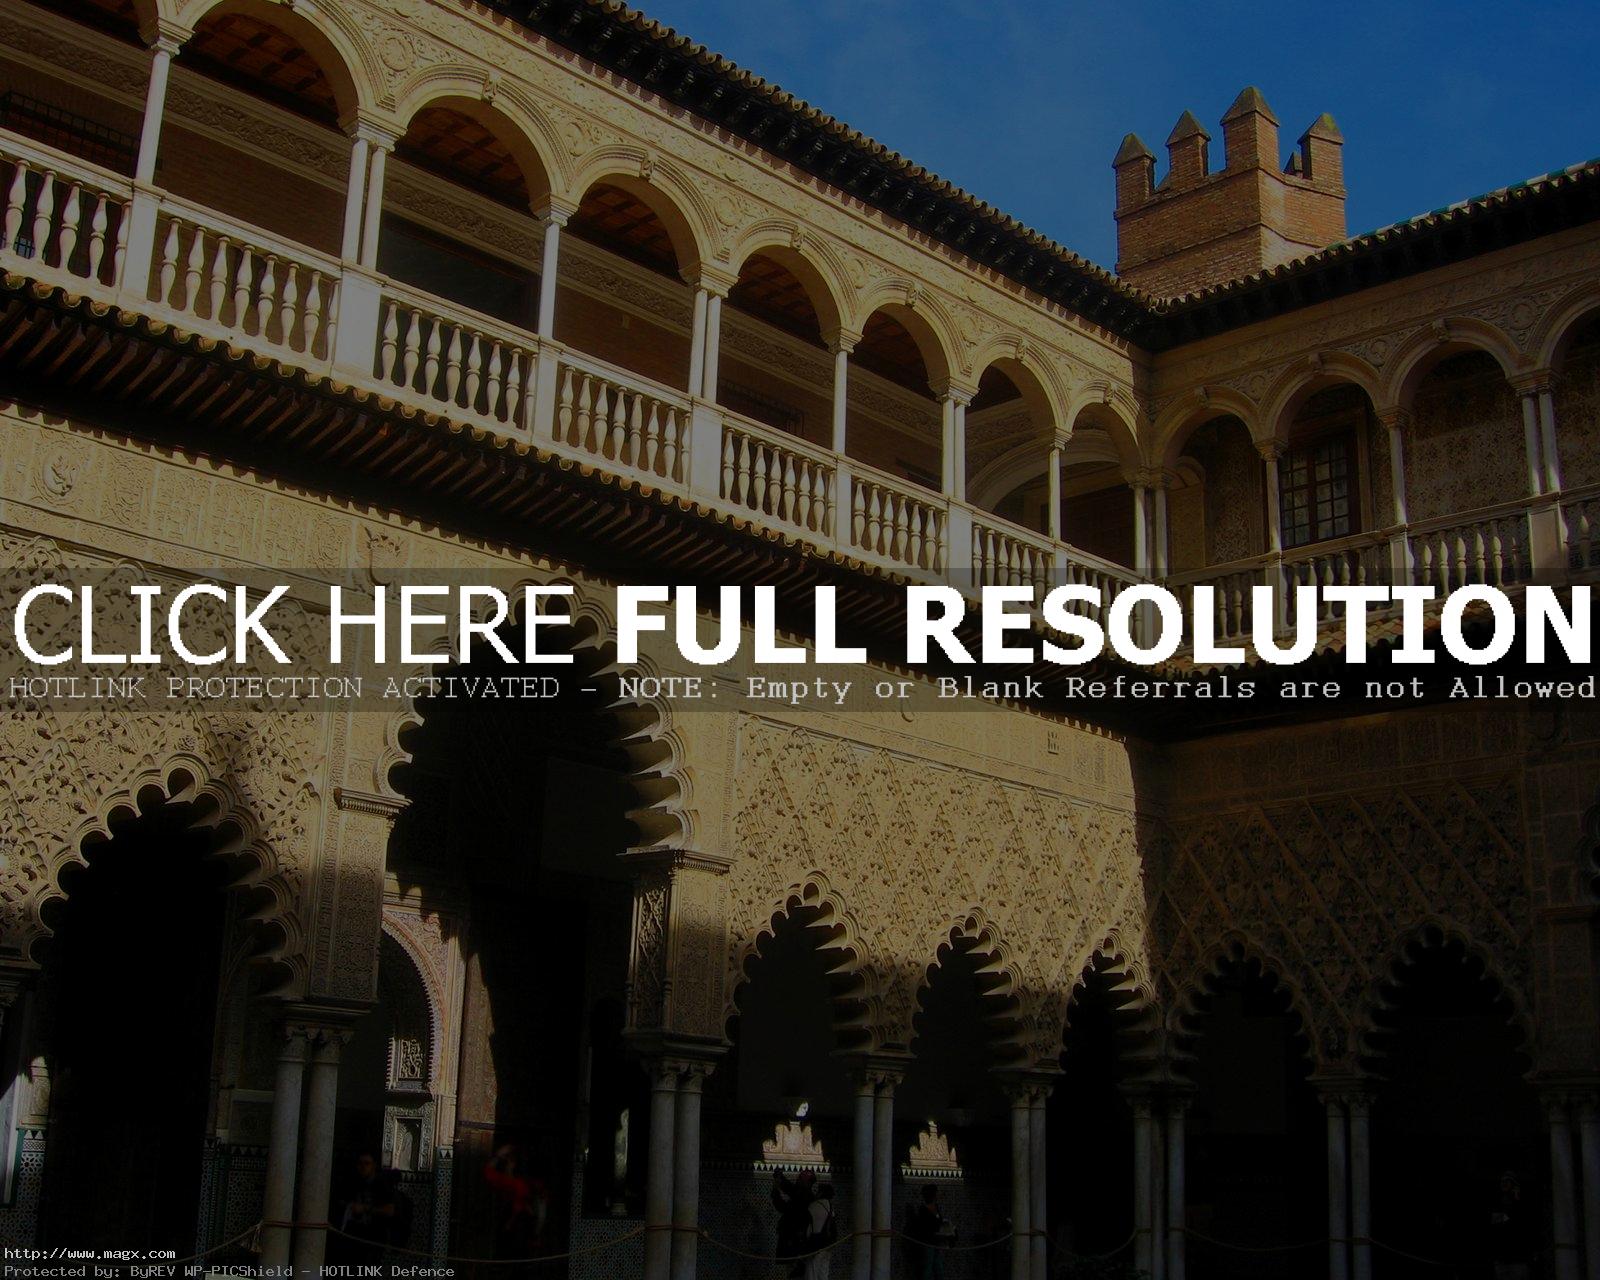 alcazar palace1 Alcazar Royal Palace of Seville, Spain